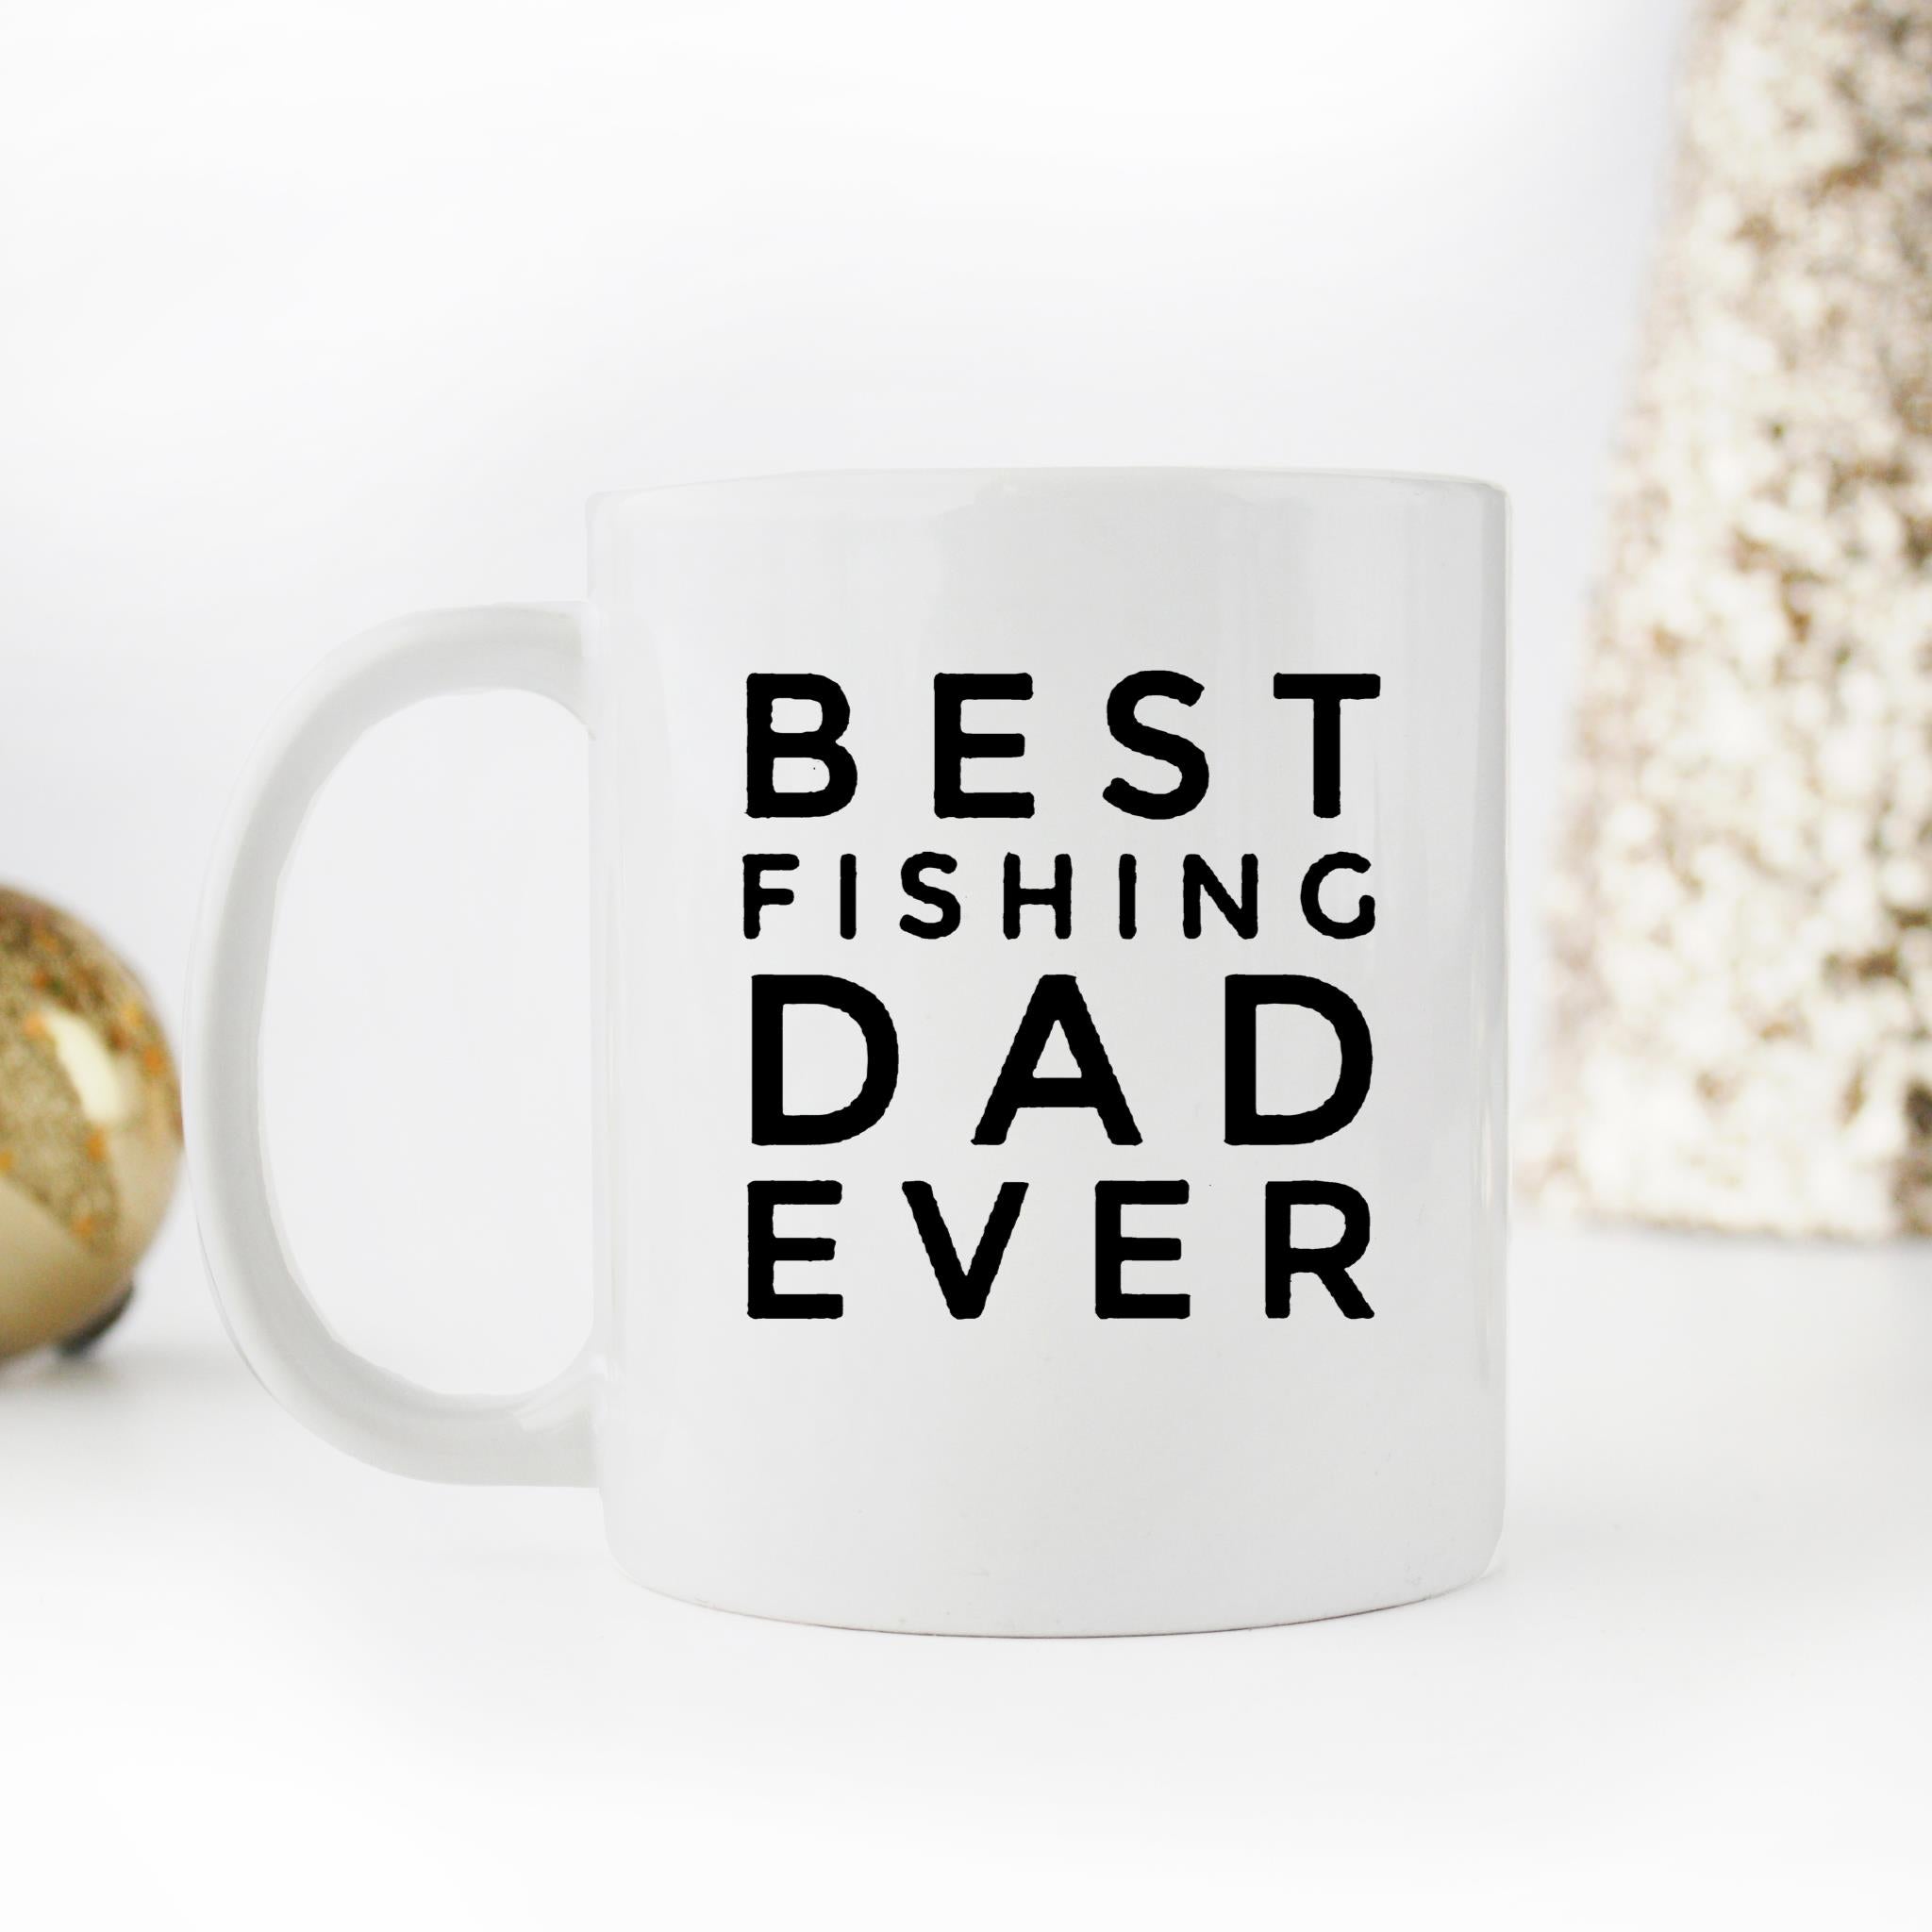 Skitongifts Funny Ceramic Novelty Coffee Mug Best Fishing Dad Ever c3bXXf5